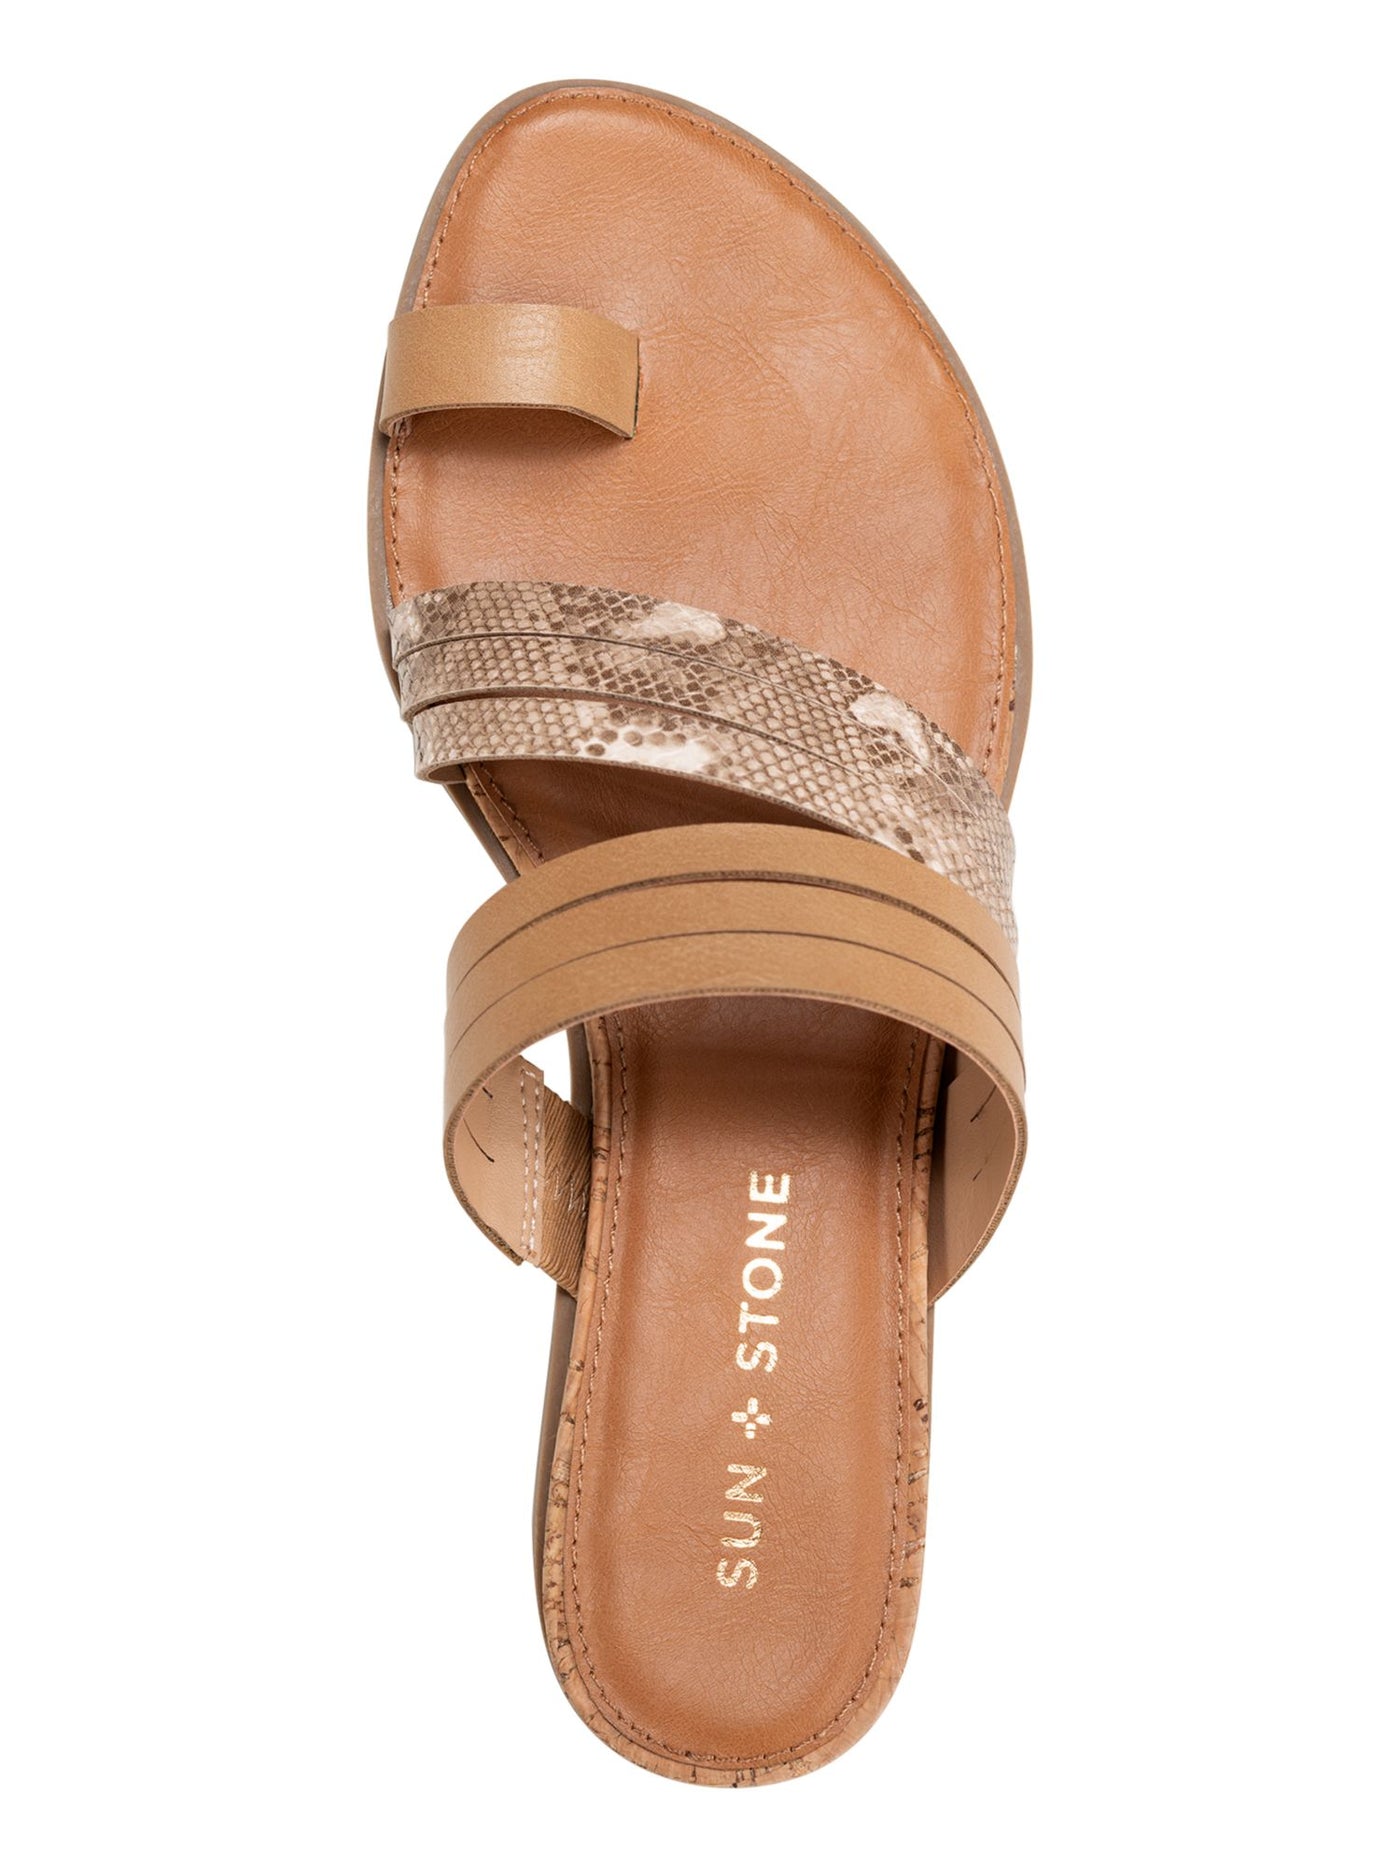 SUN STONE Womens Brown Snakeskin 1/2 Heel Toe-Ring Slip Resistant Padded Kye Round Toe Wedge Slip On Slide Sandals Shoes 11 M